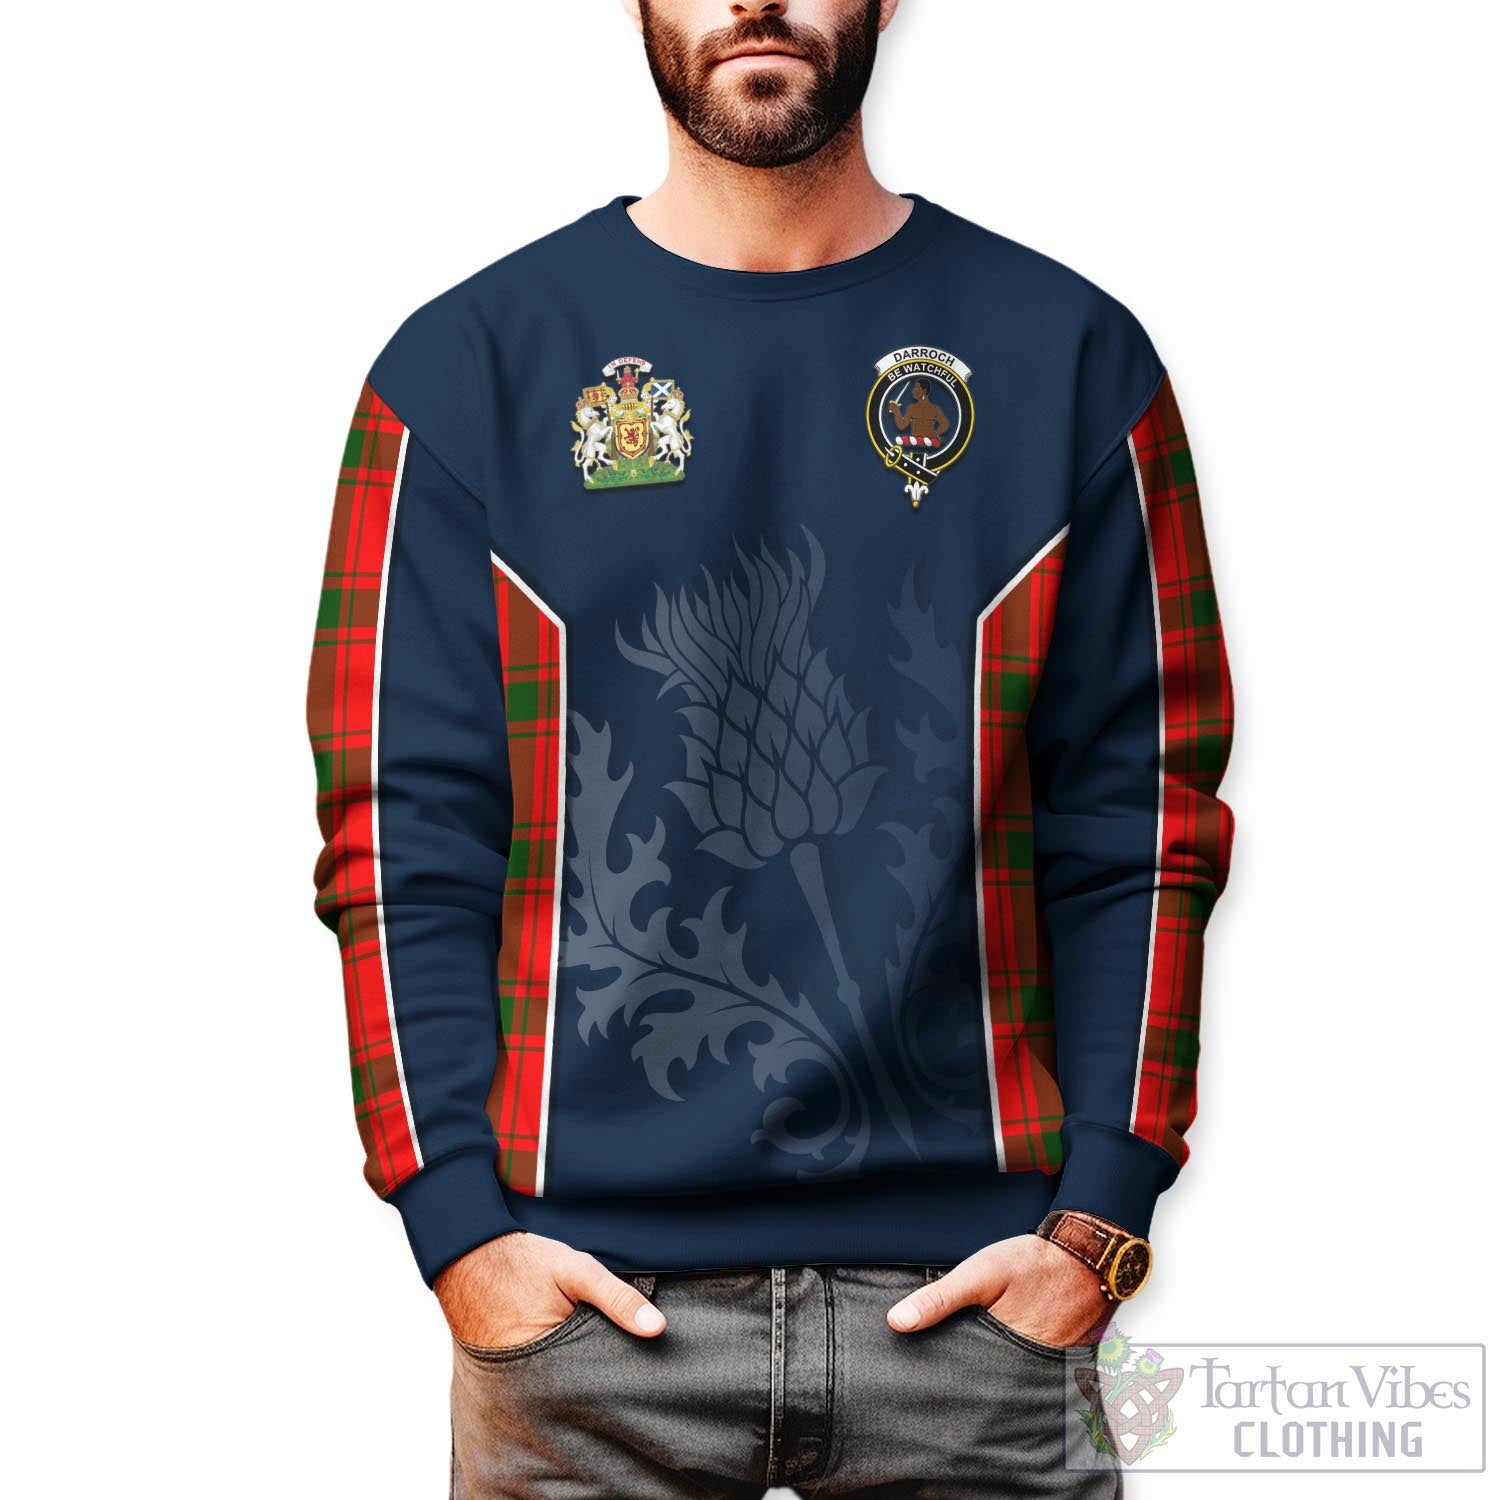 Tartan Vibes Clothing Darroch Tartan Sweatshirt with Family Crest and Scottish Thistle Vibes Sport Style